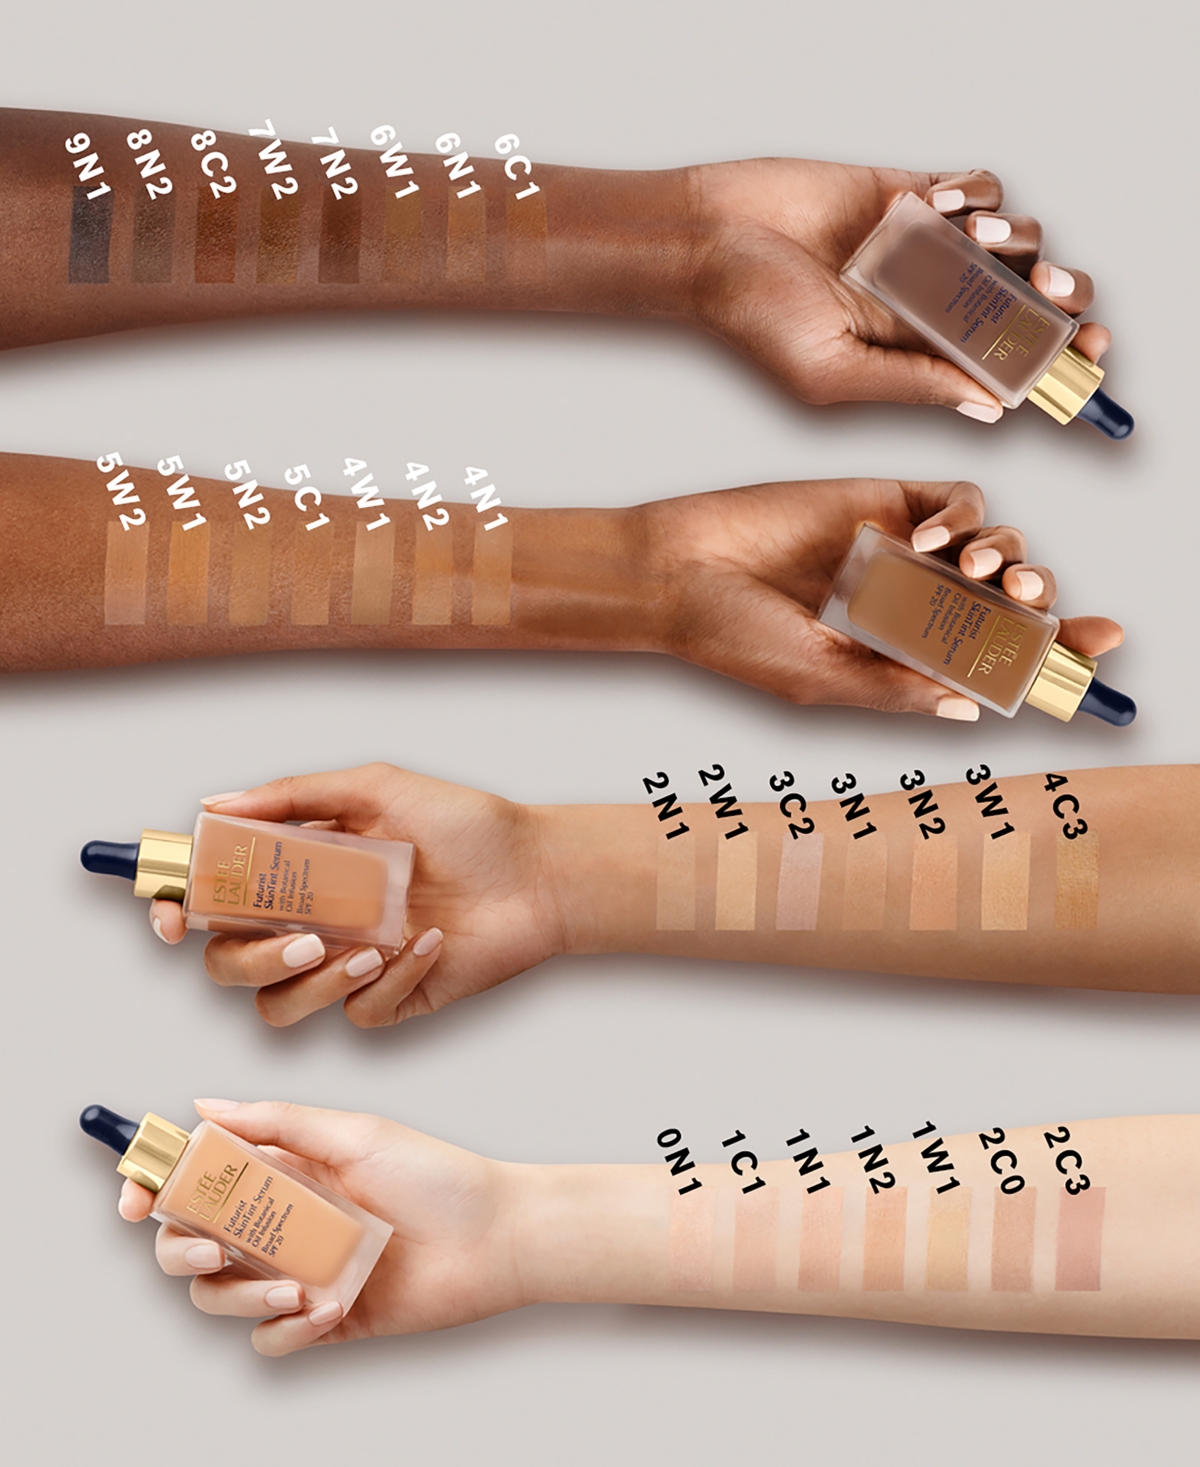 Shop Estée Lauder Futurist Skin Tint Serum Foundation Spf 20 In N Spiced Sand